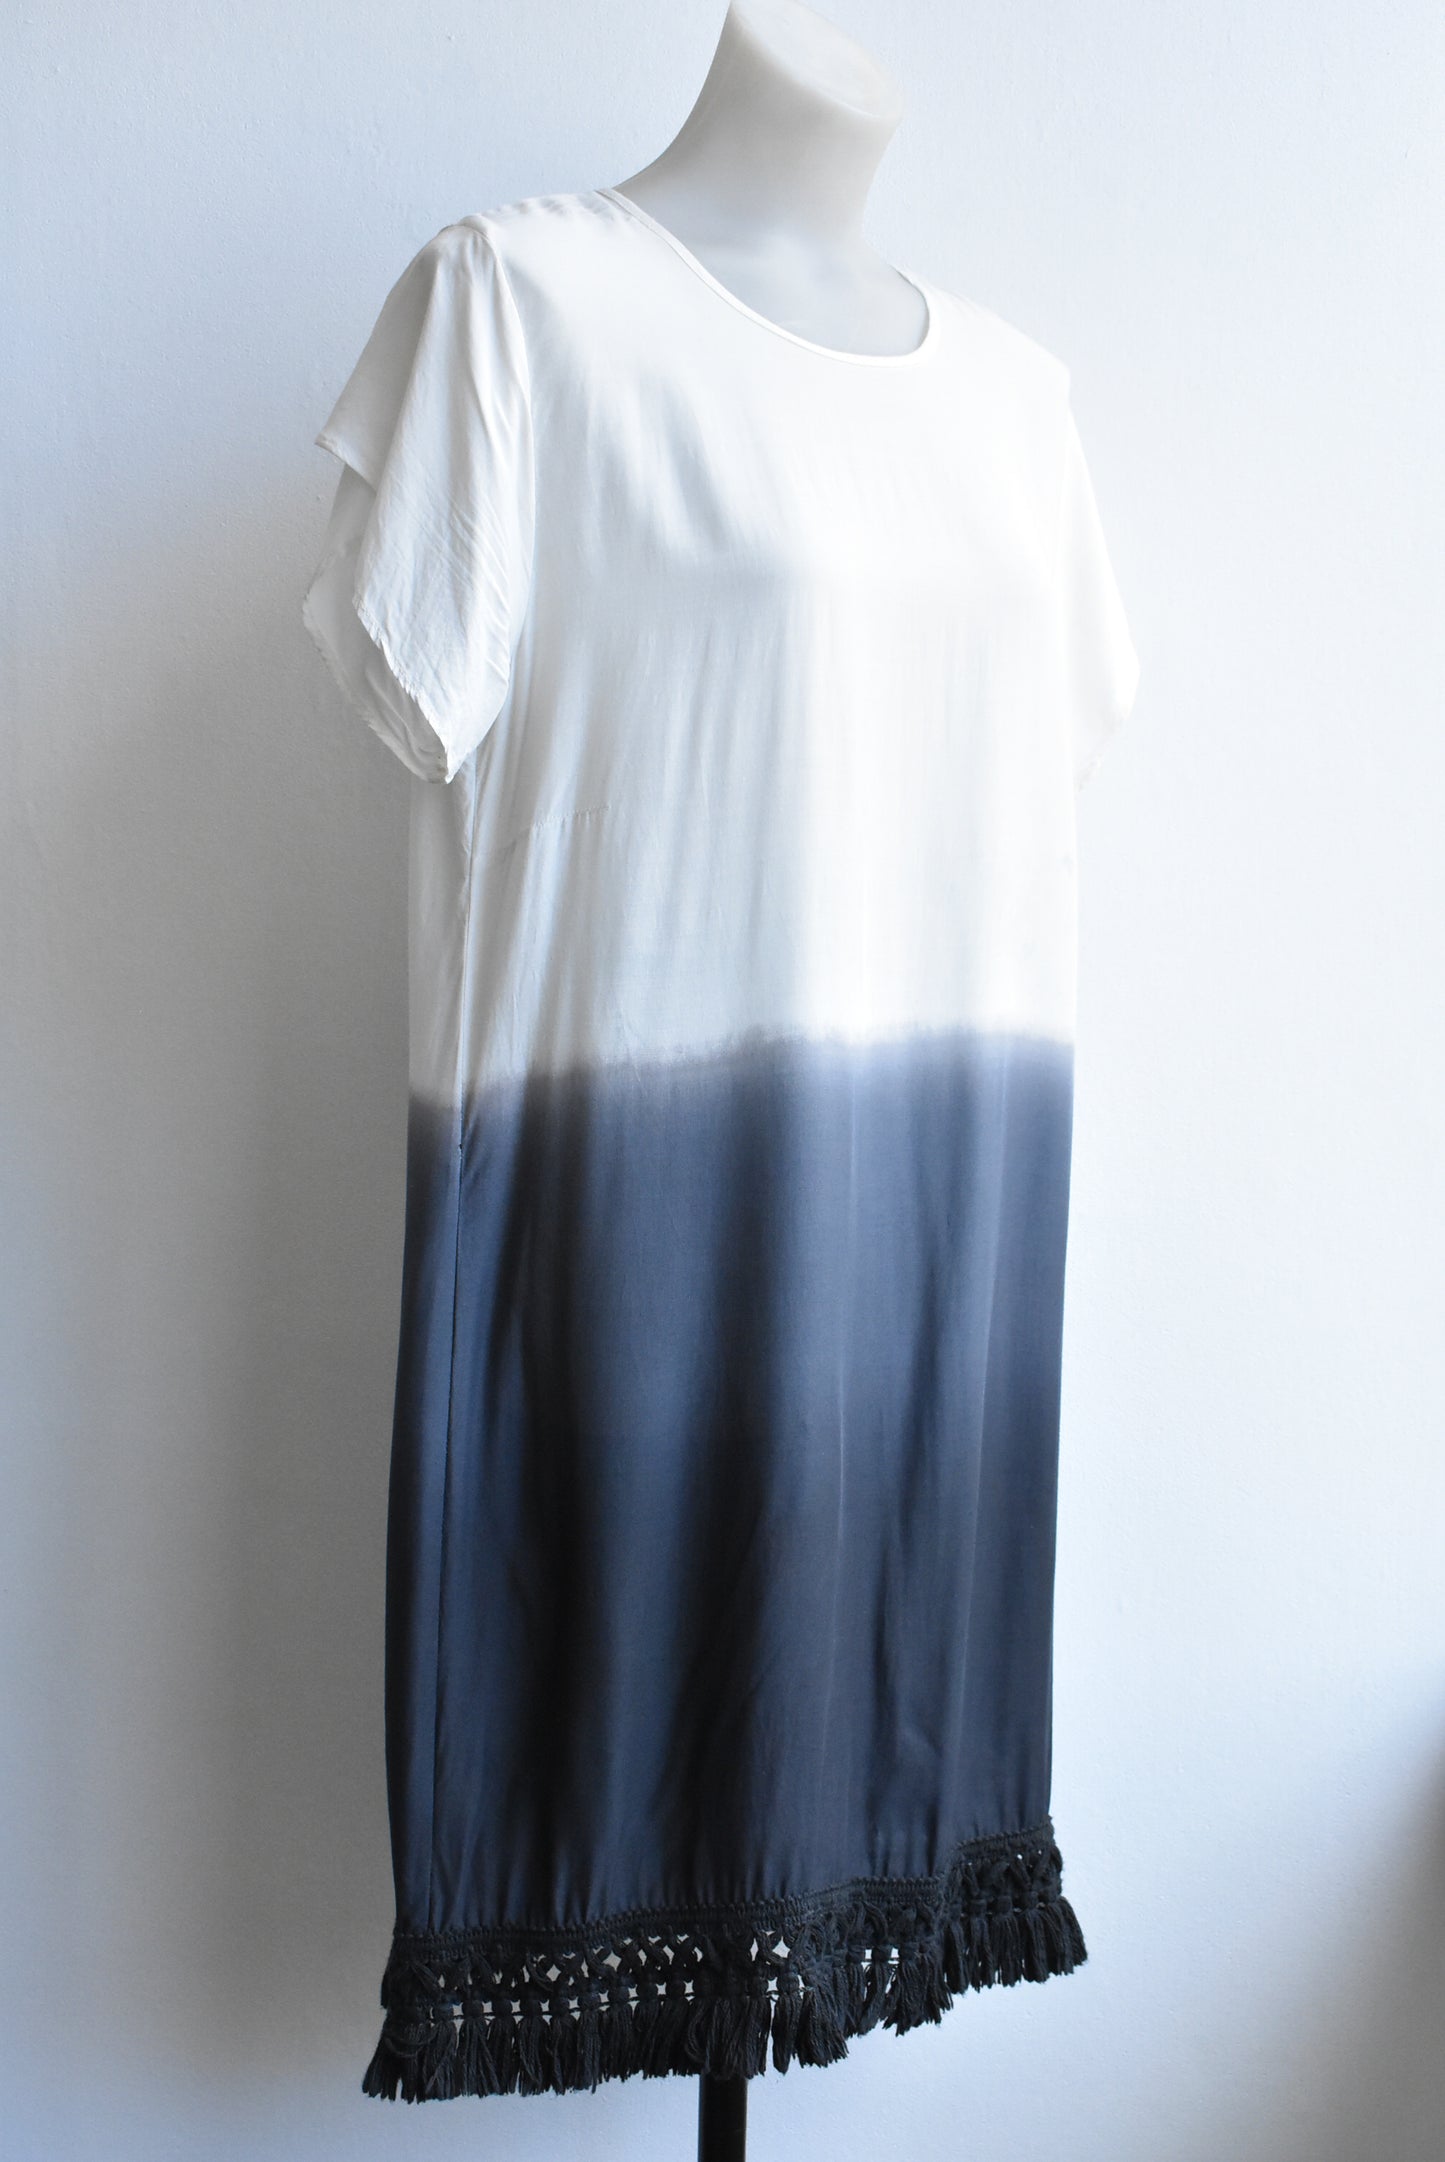 Blak gradient shift dress, 14